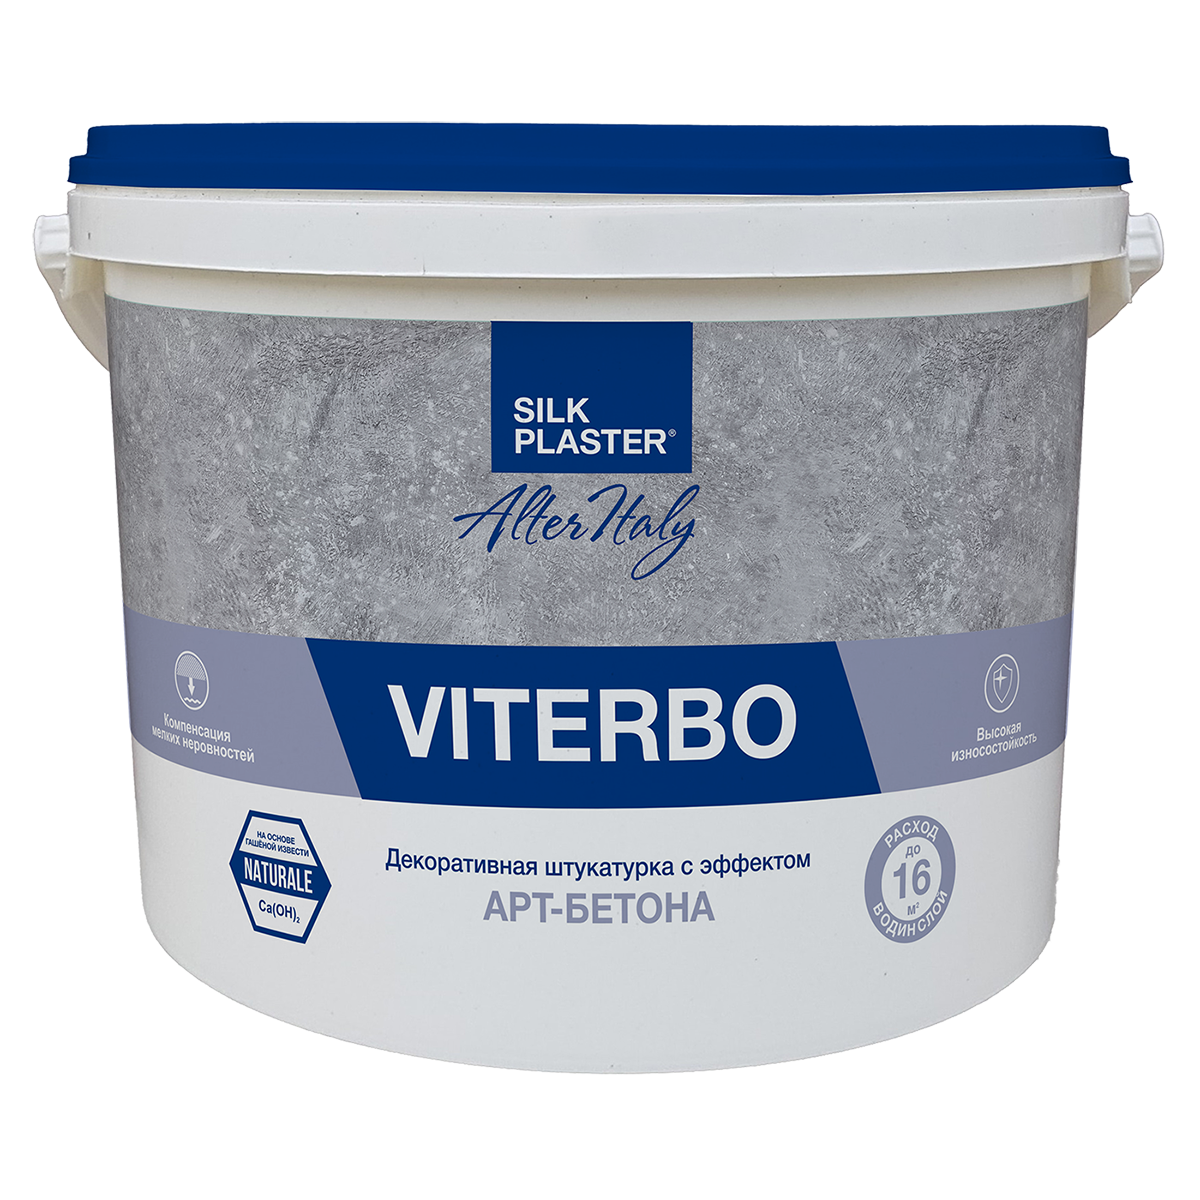 AlterItaly VITERBO